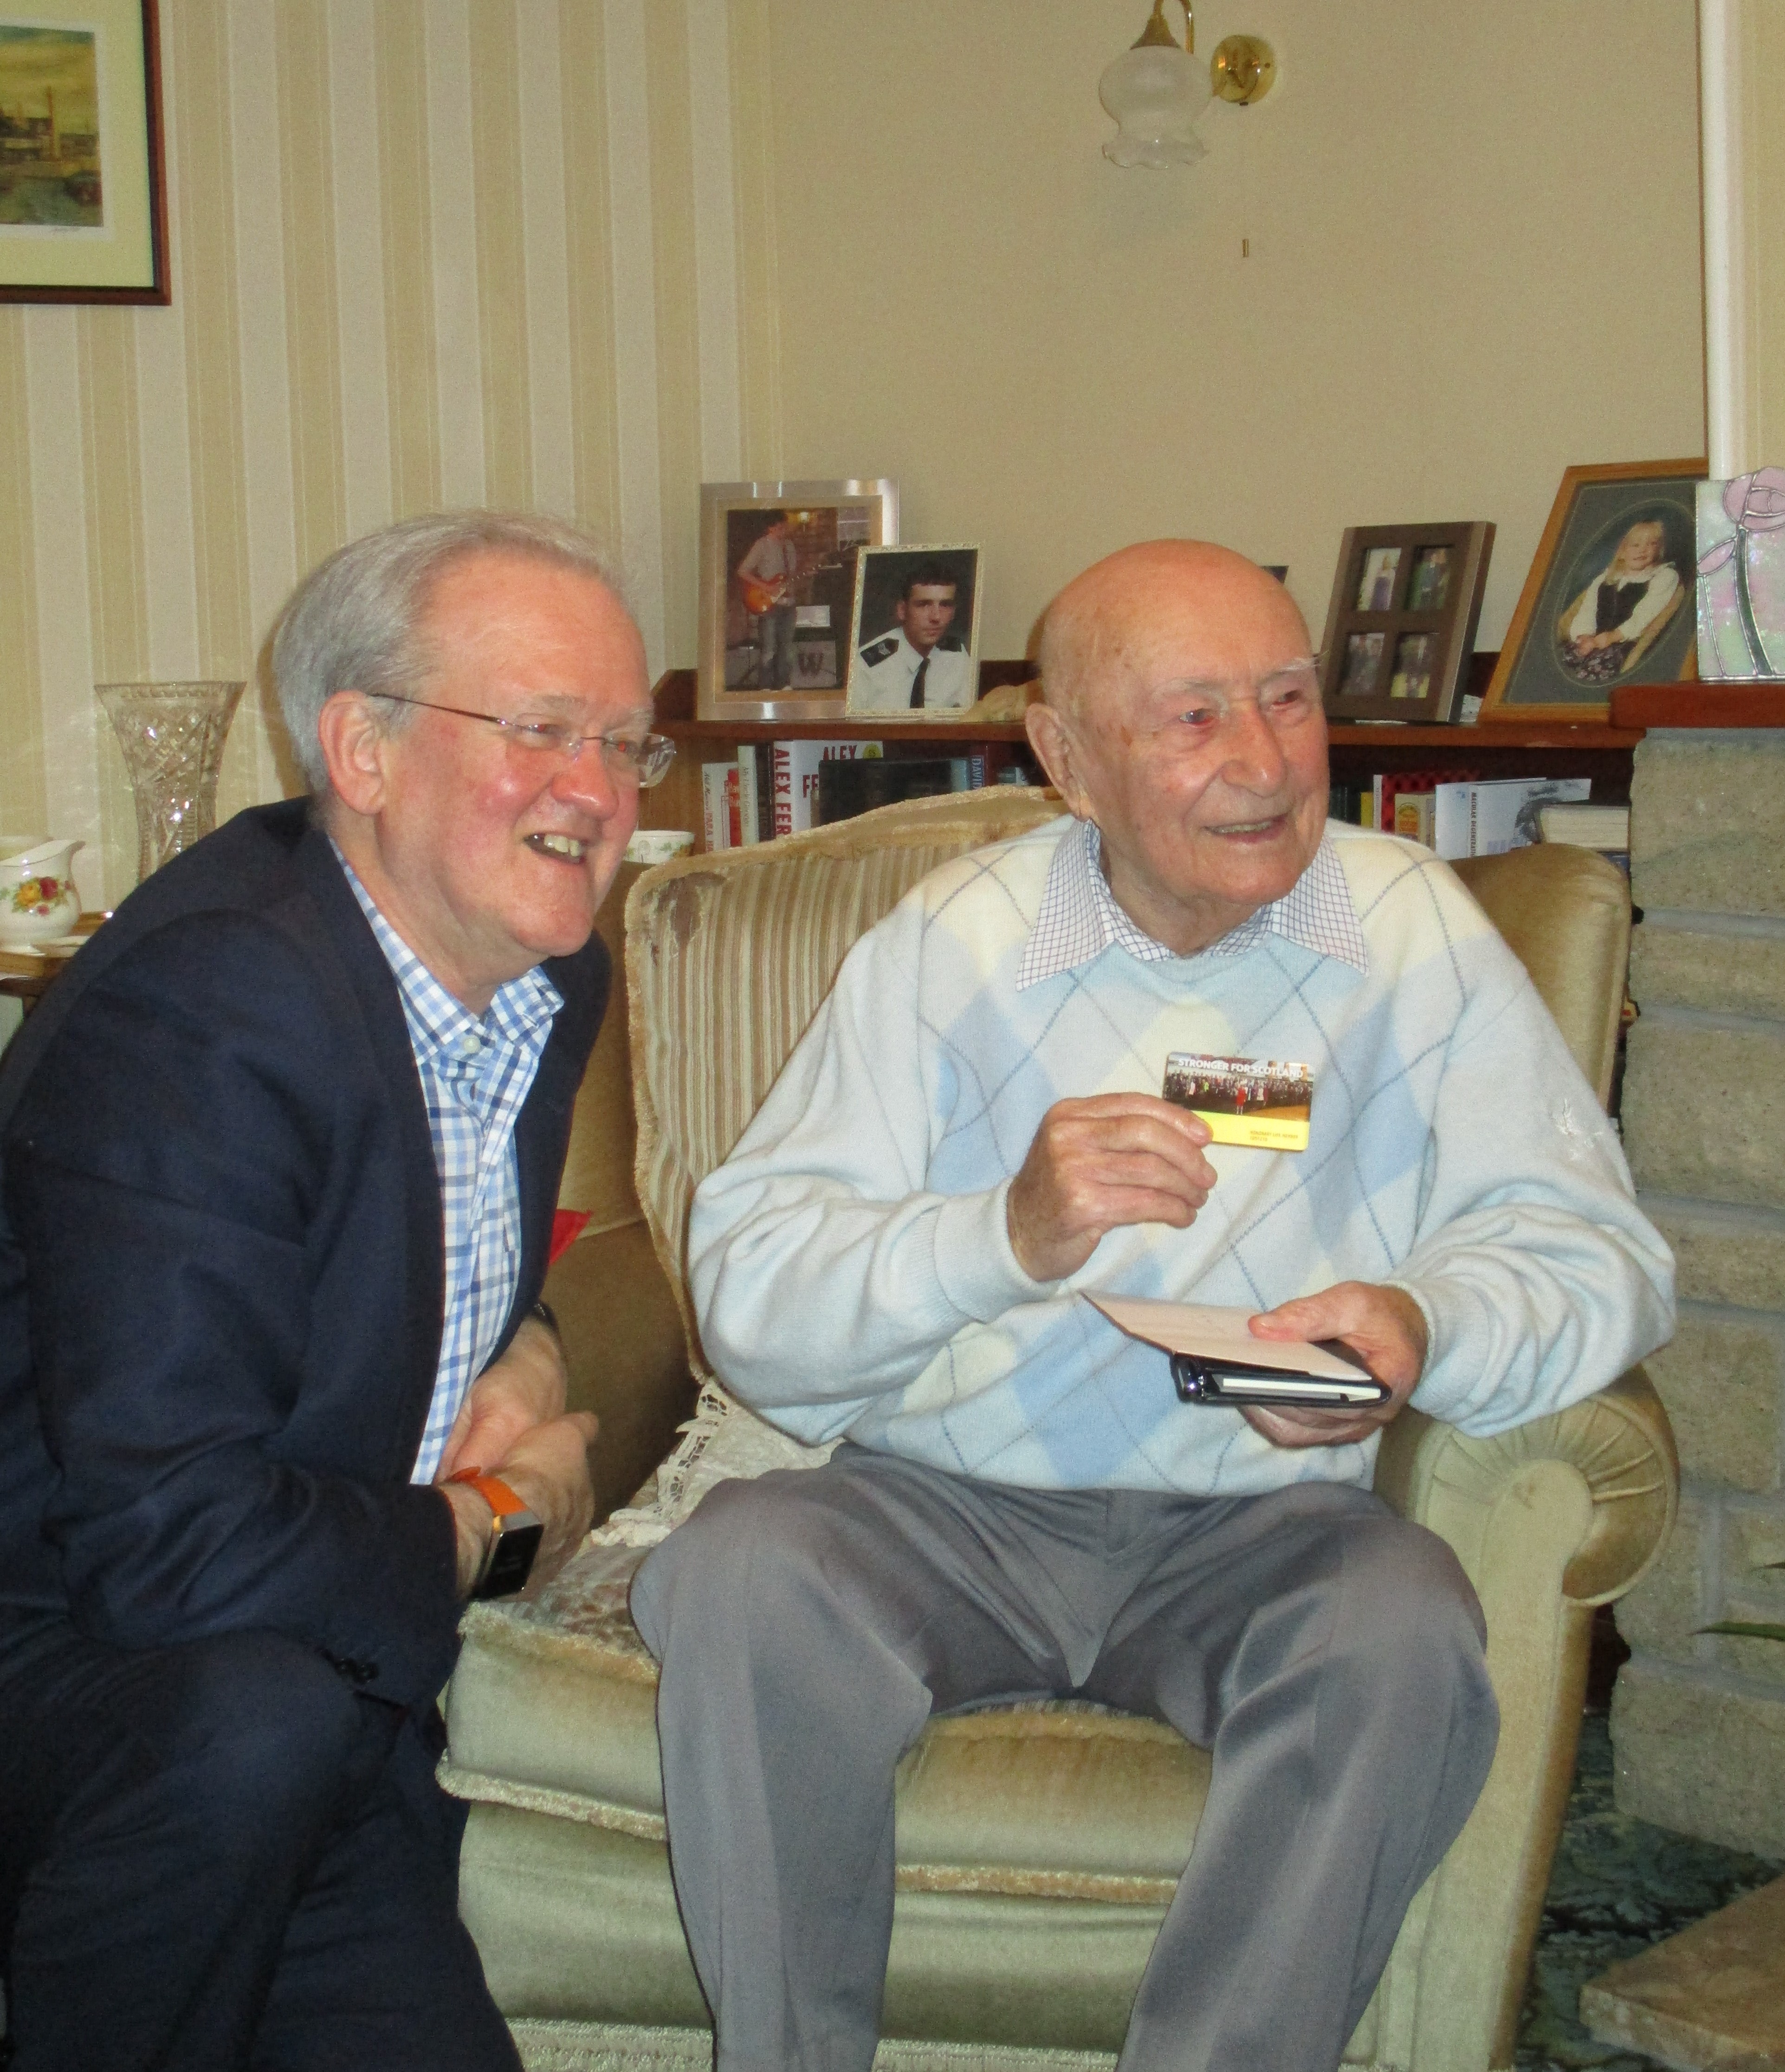 Stewart Stevenson MSP with Bob Ritchie holding his SNP Life Membership card